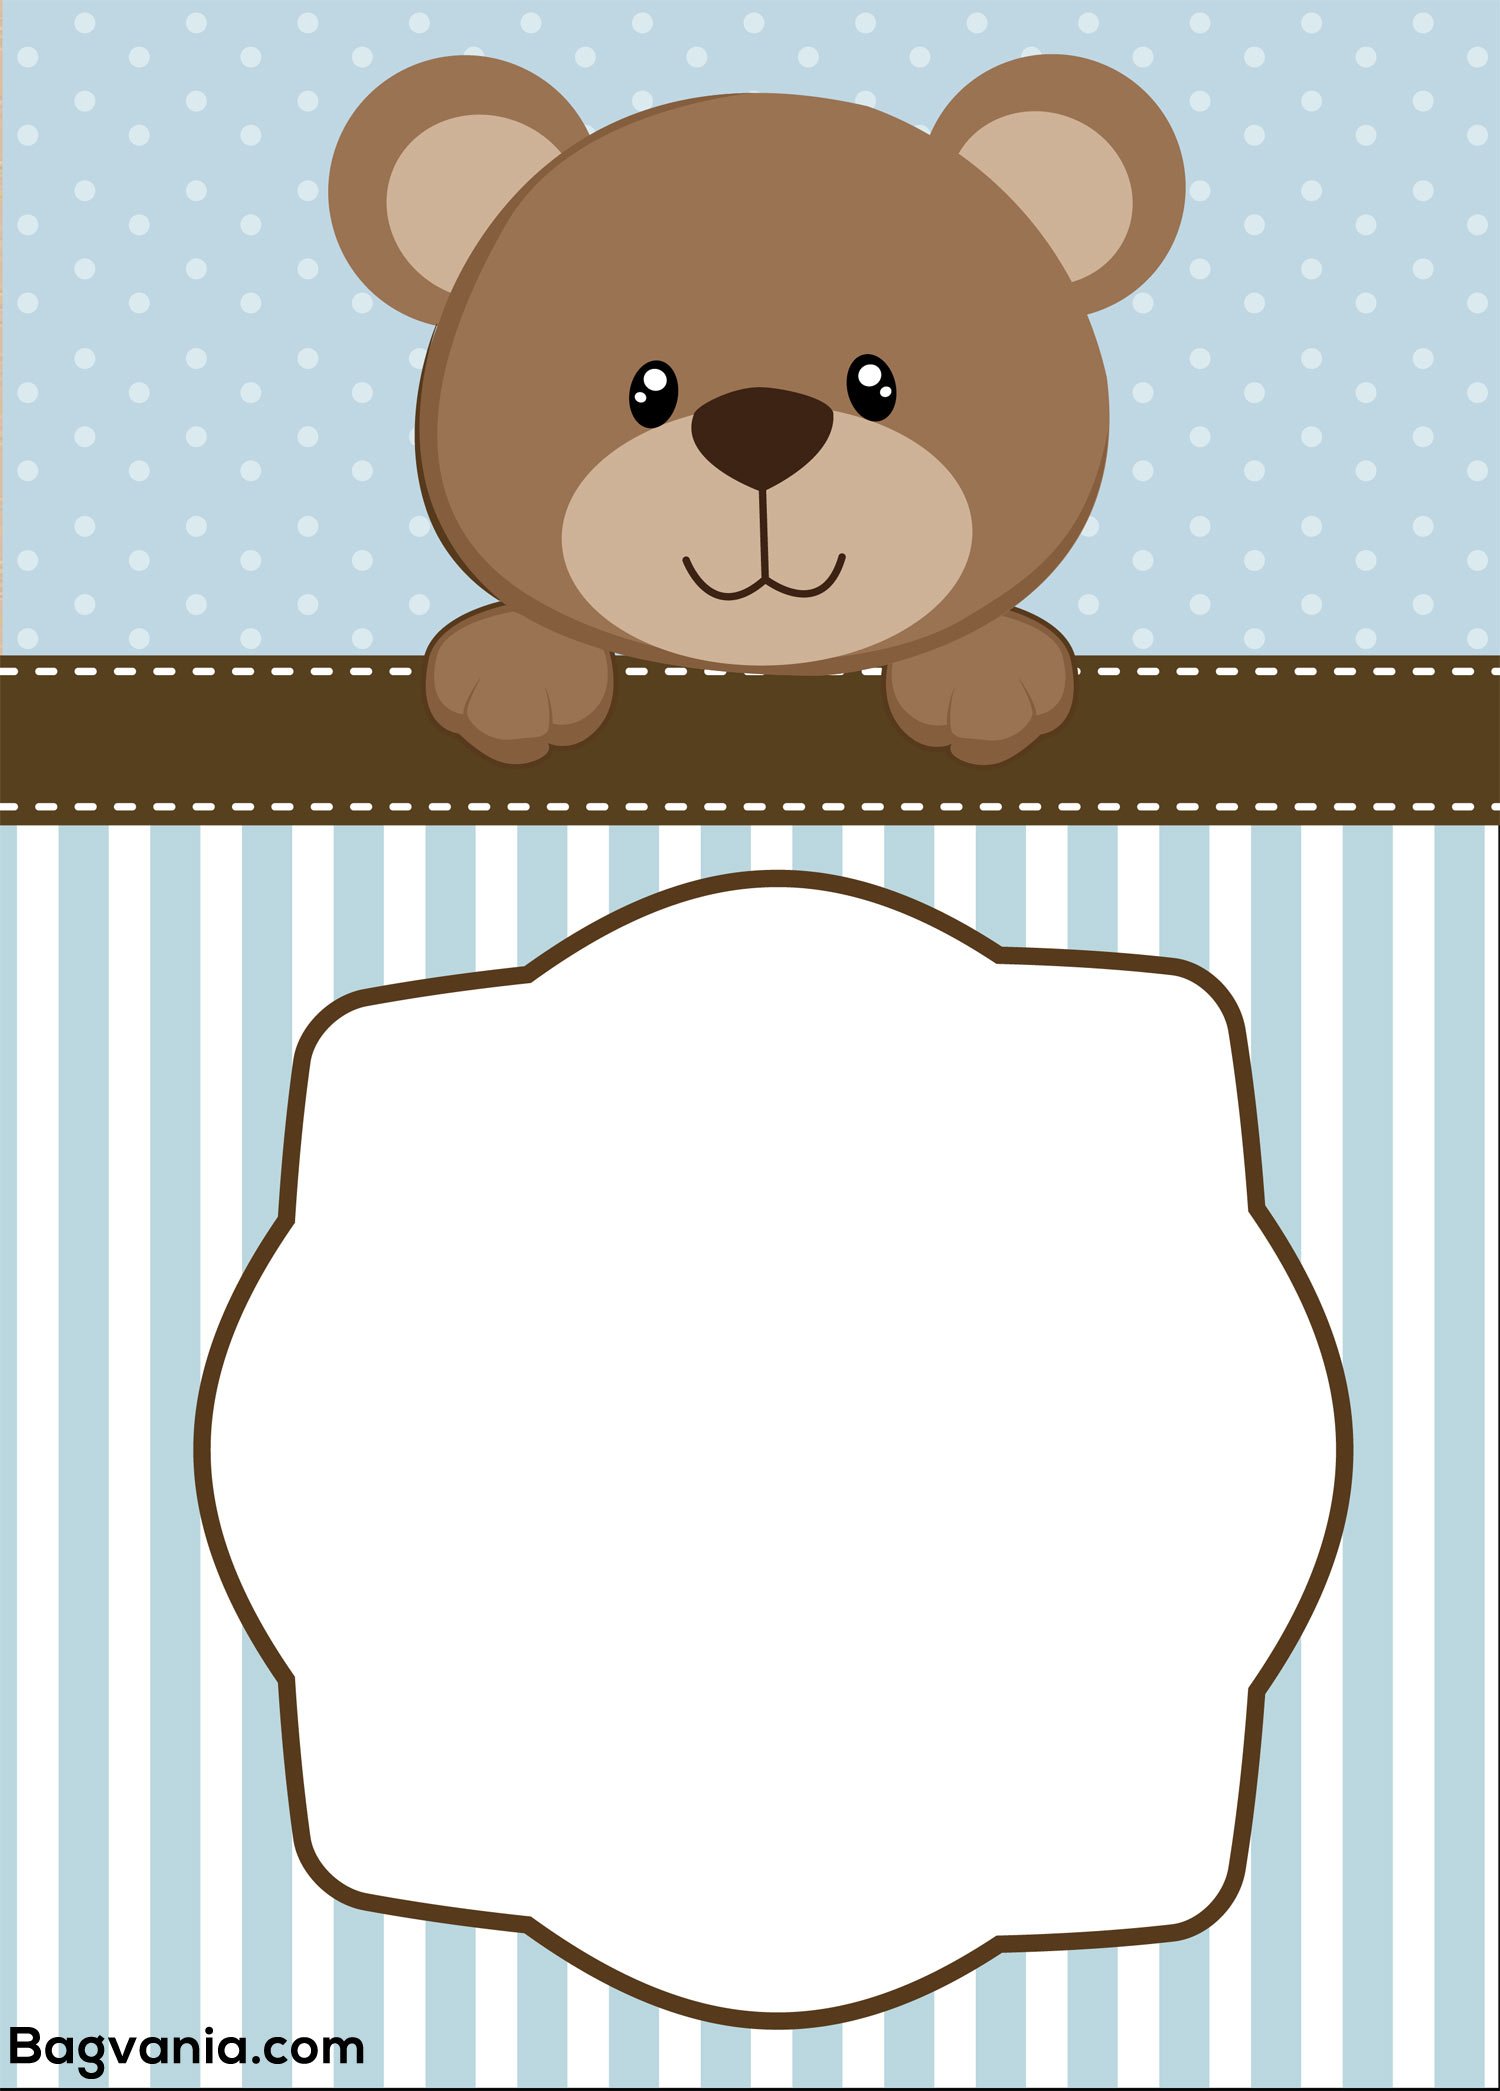 Free Teddy Bear Birthday Invitation Templates Bagvania FREE Printable Invitation Template